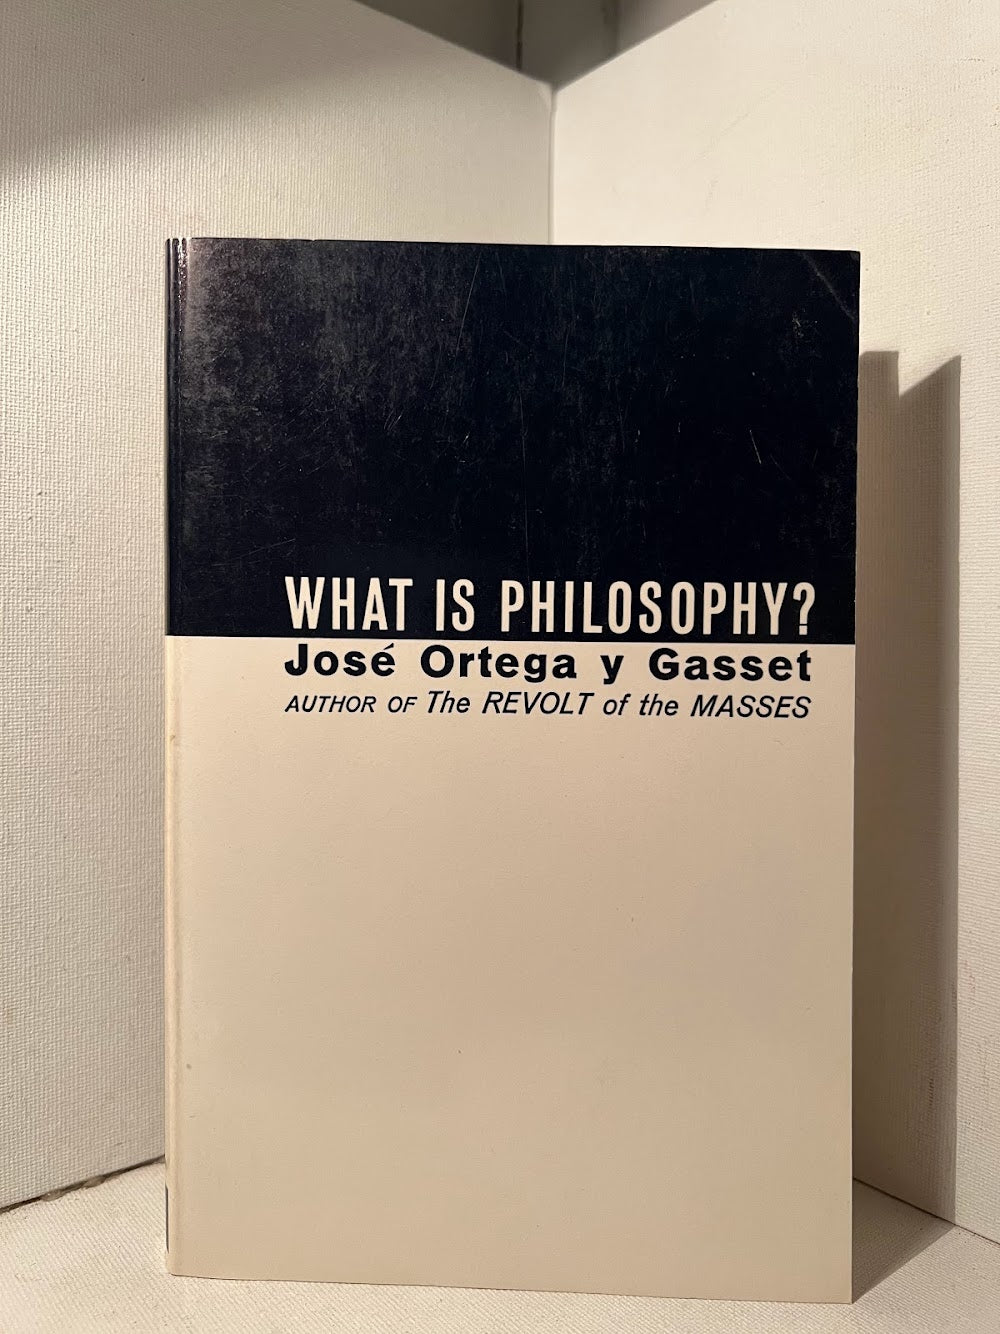 What Is Philosophy? by Jose Ortega y Gasset